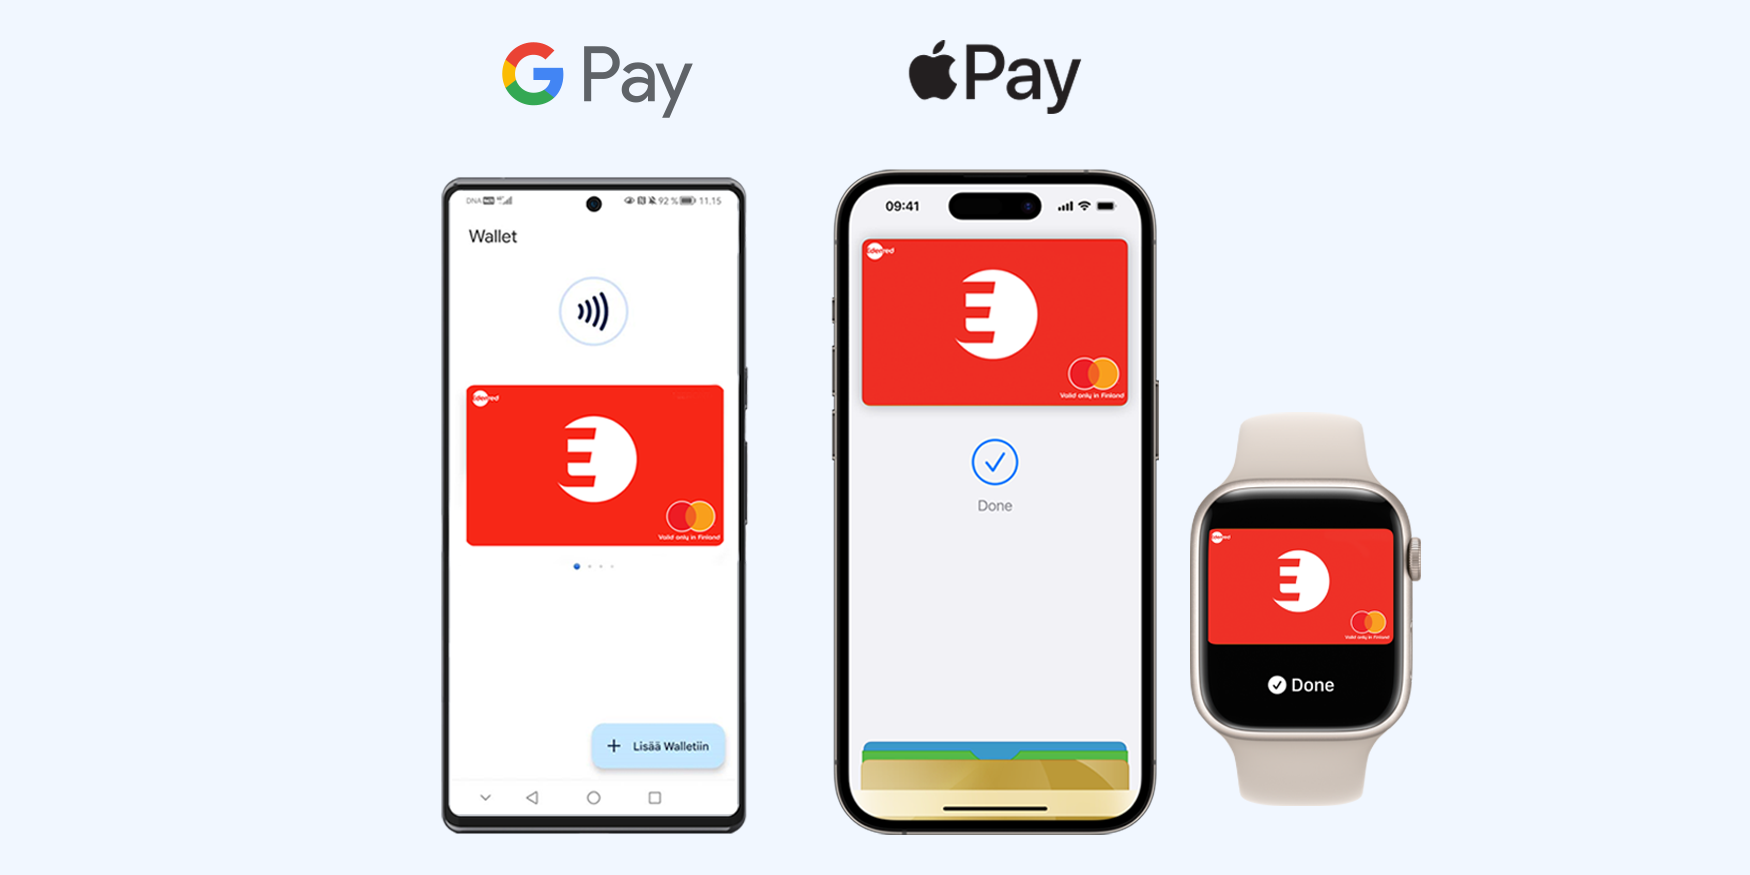 Edenred's versatile mobile payment methods